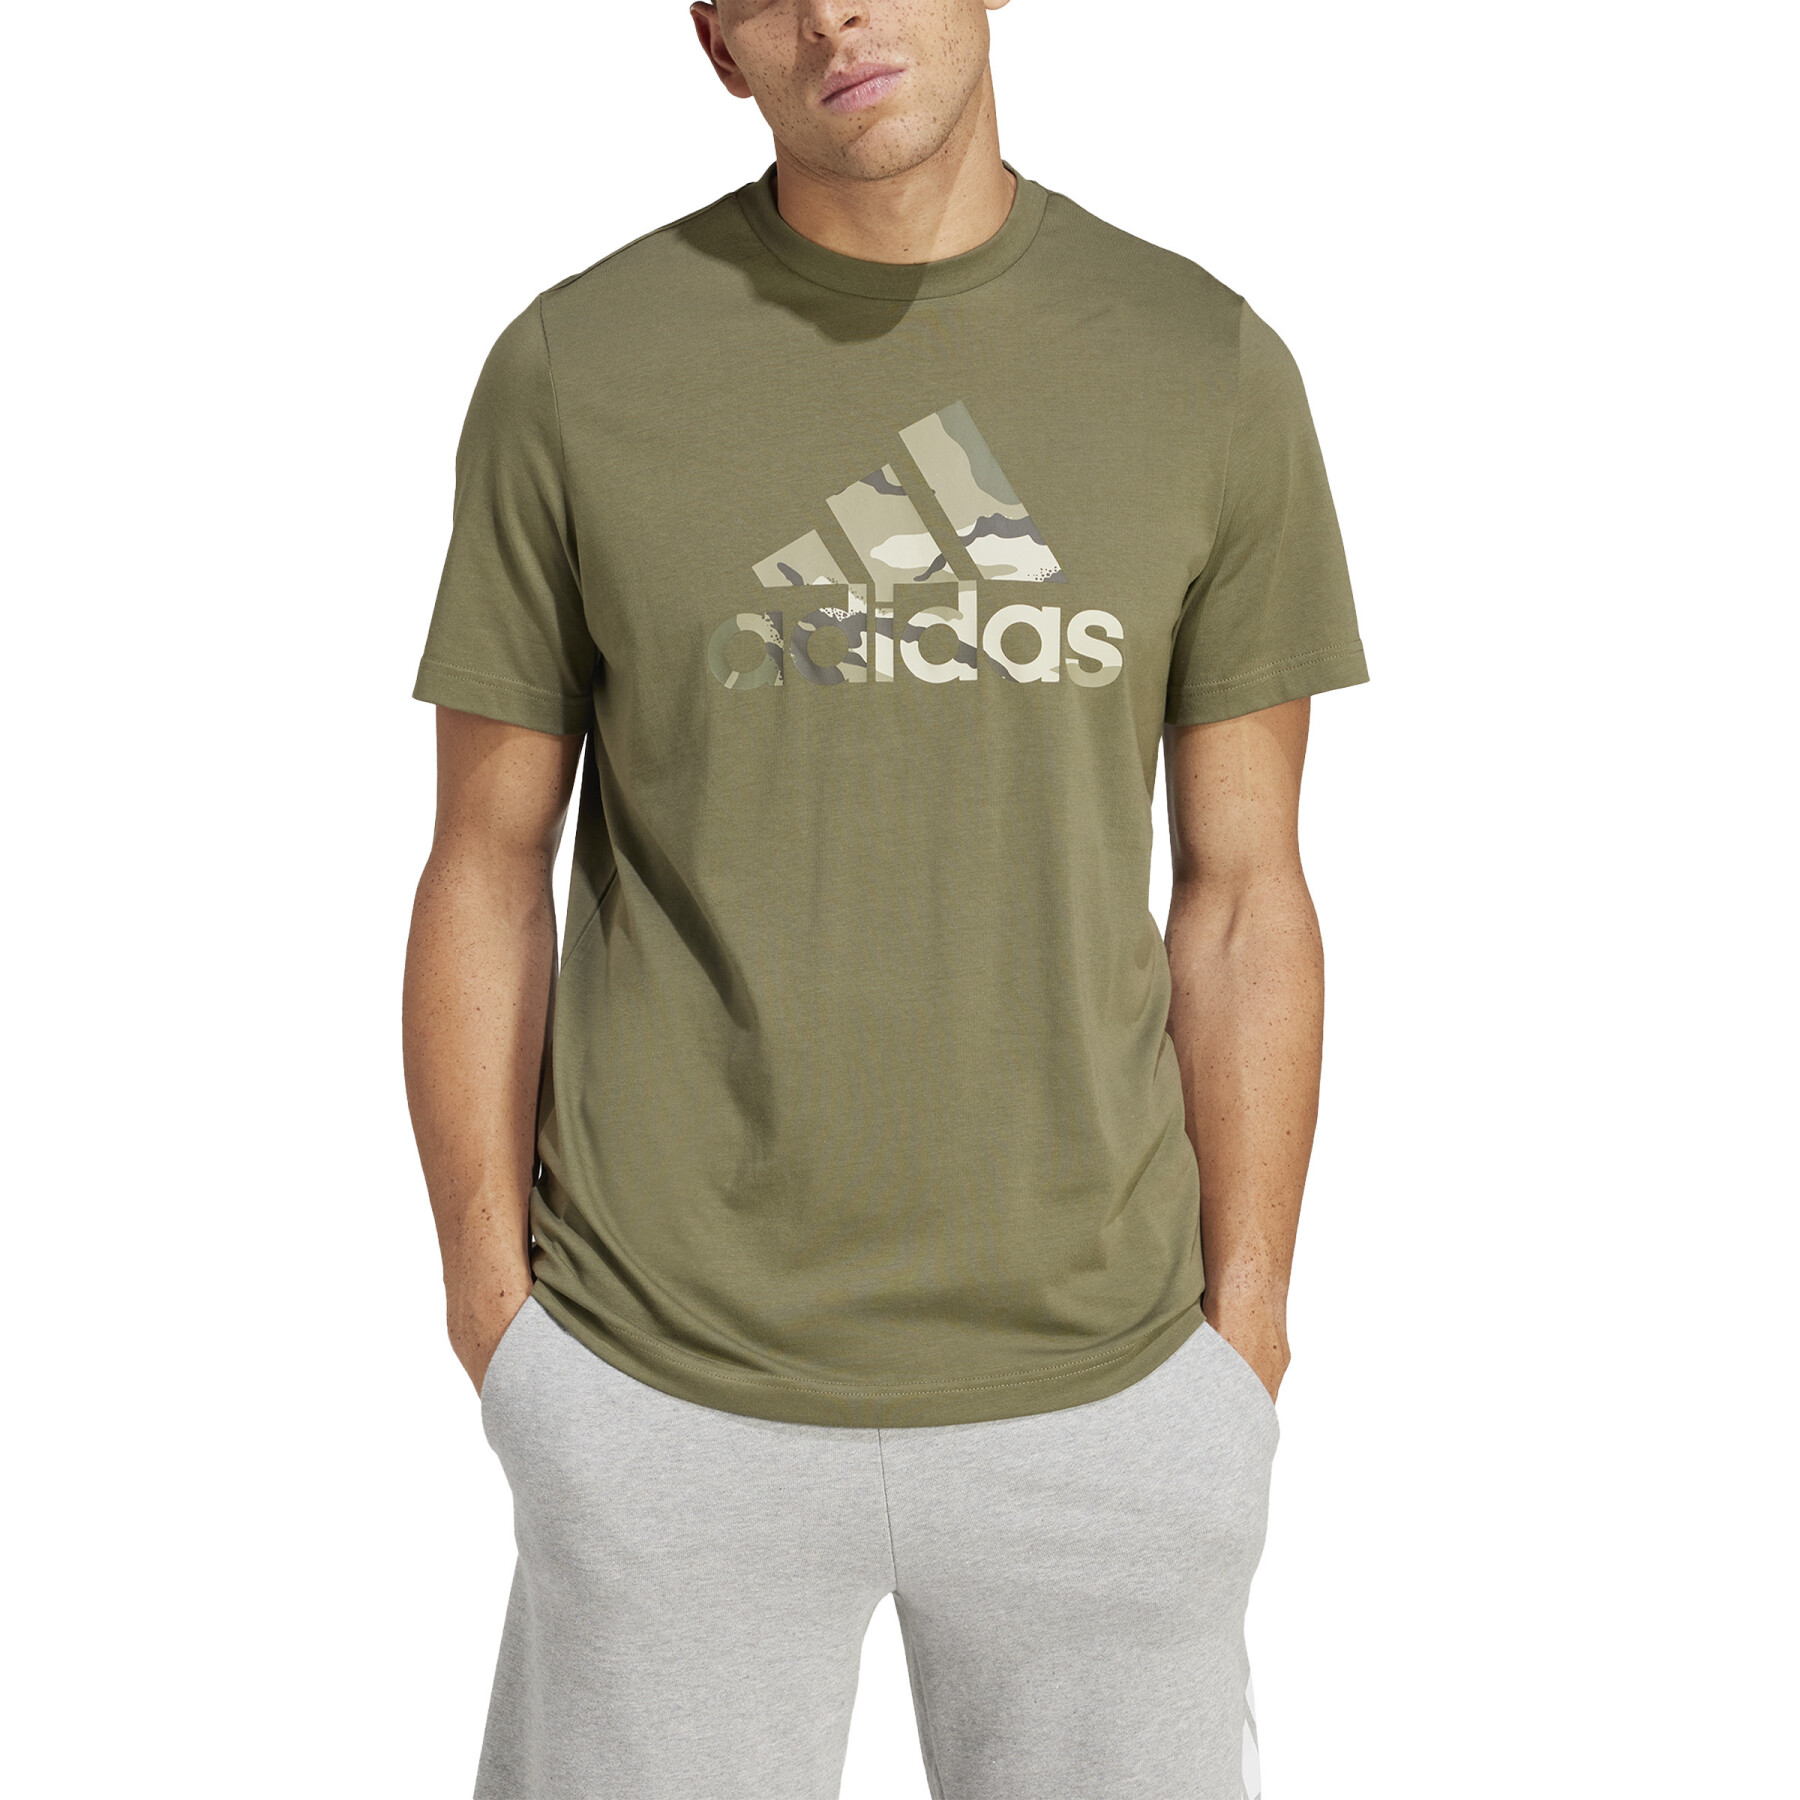 Grafisches T-Shirt adidas Camo Badge of Sport